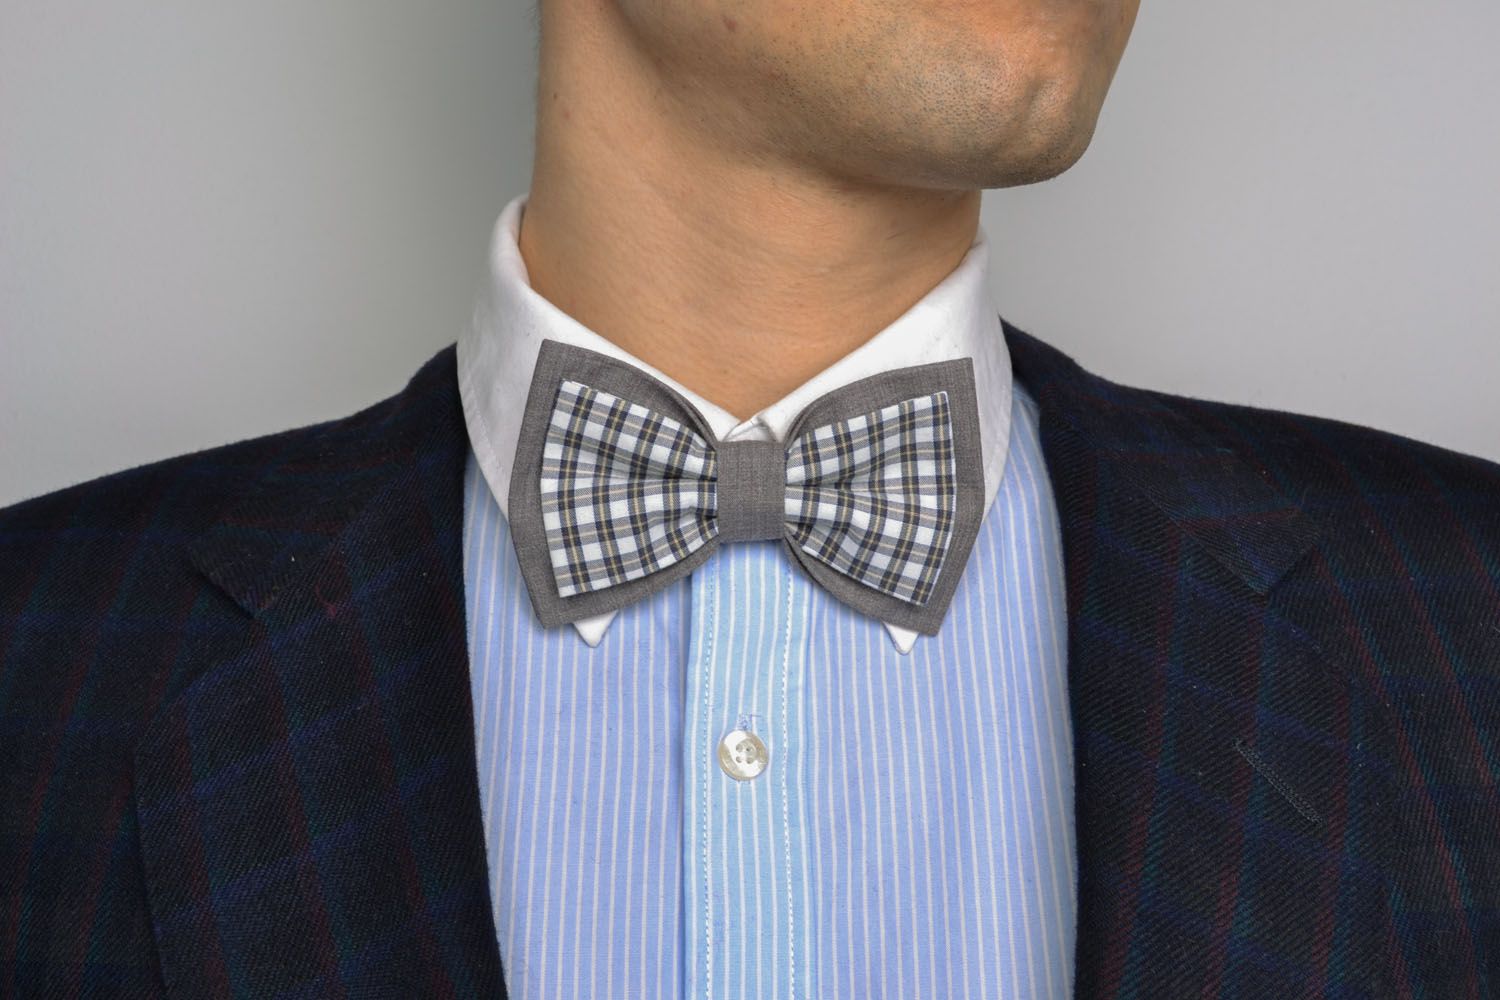 Checkered bow tie photo 1